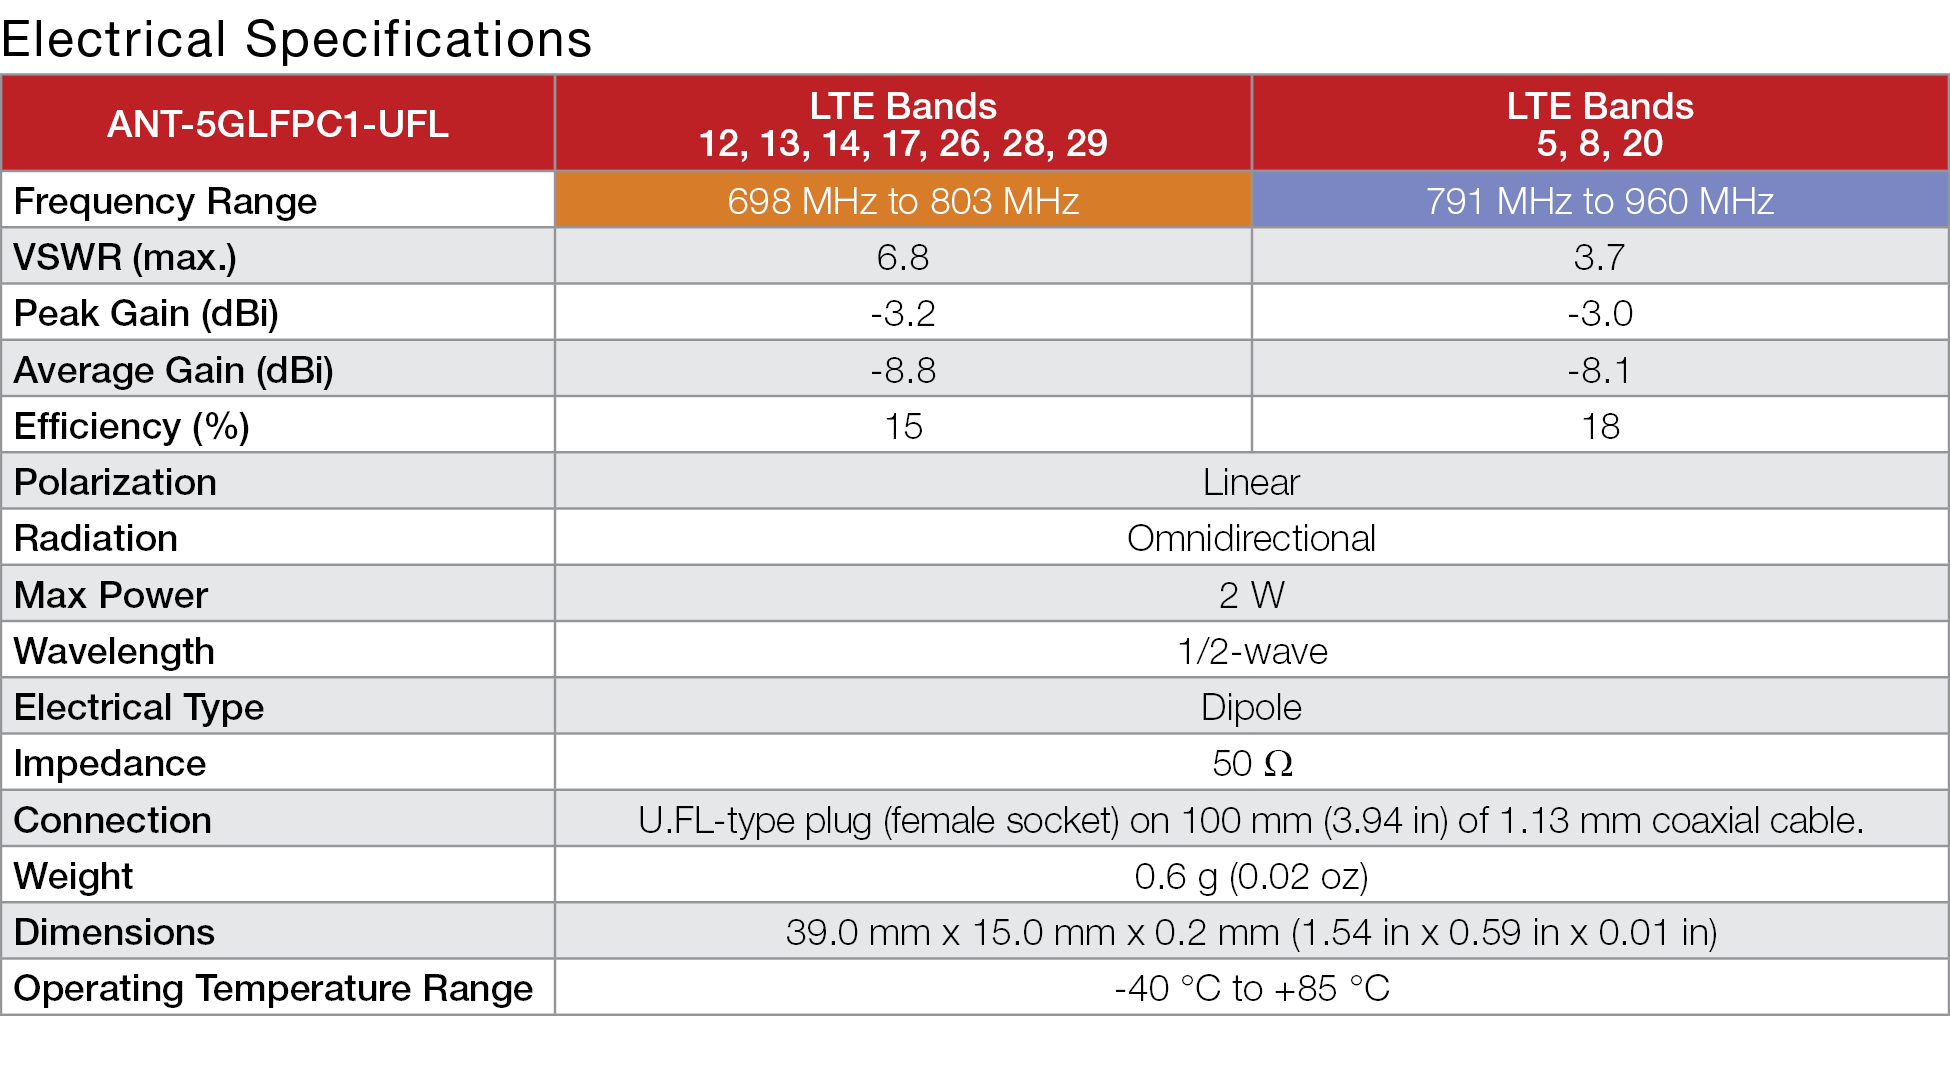 5GLFPC1 Flexible Sub 6 LTE 5G Cellular Antenna Specs